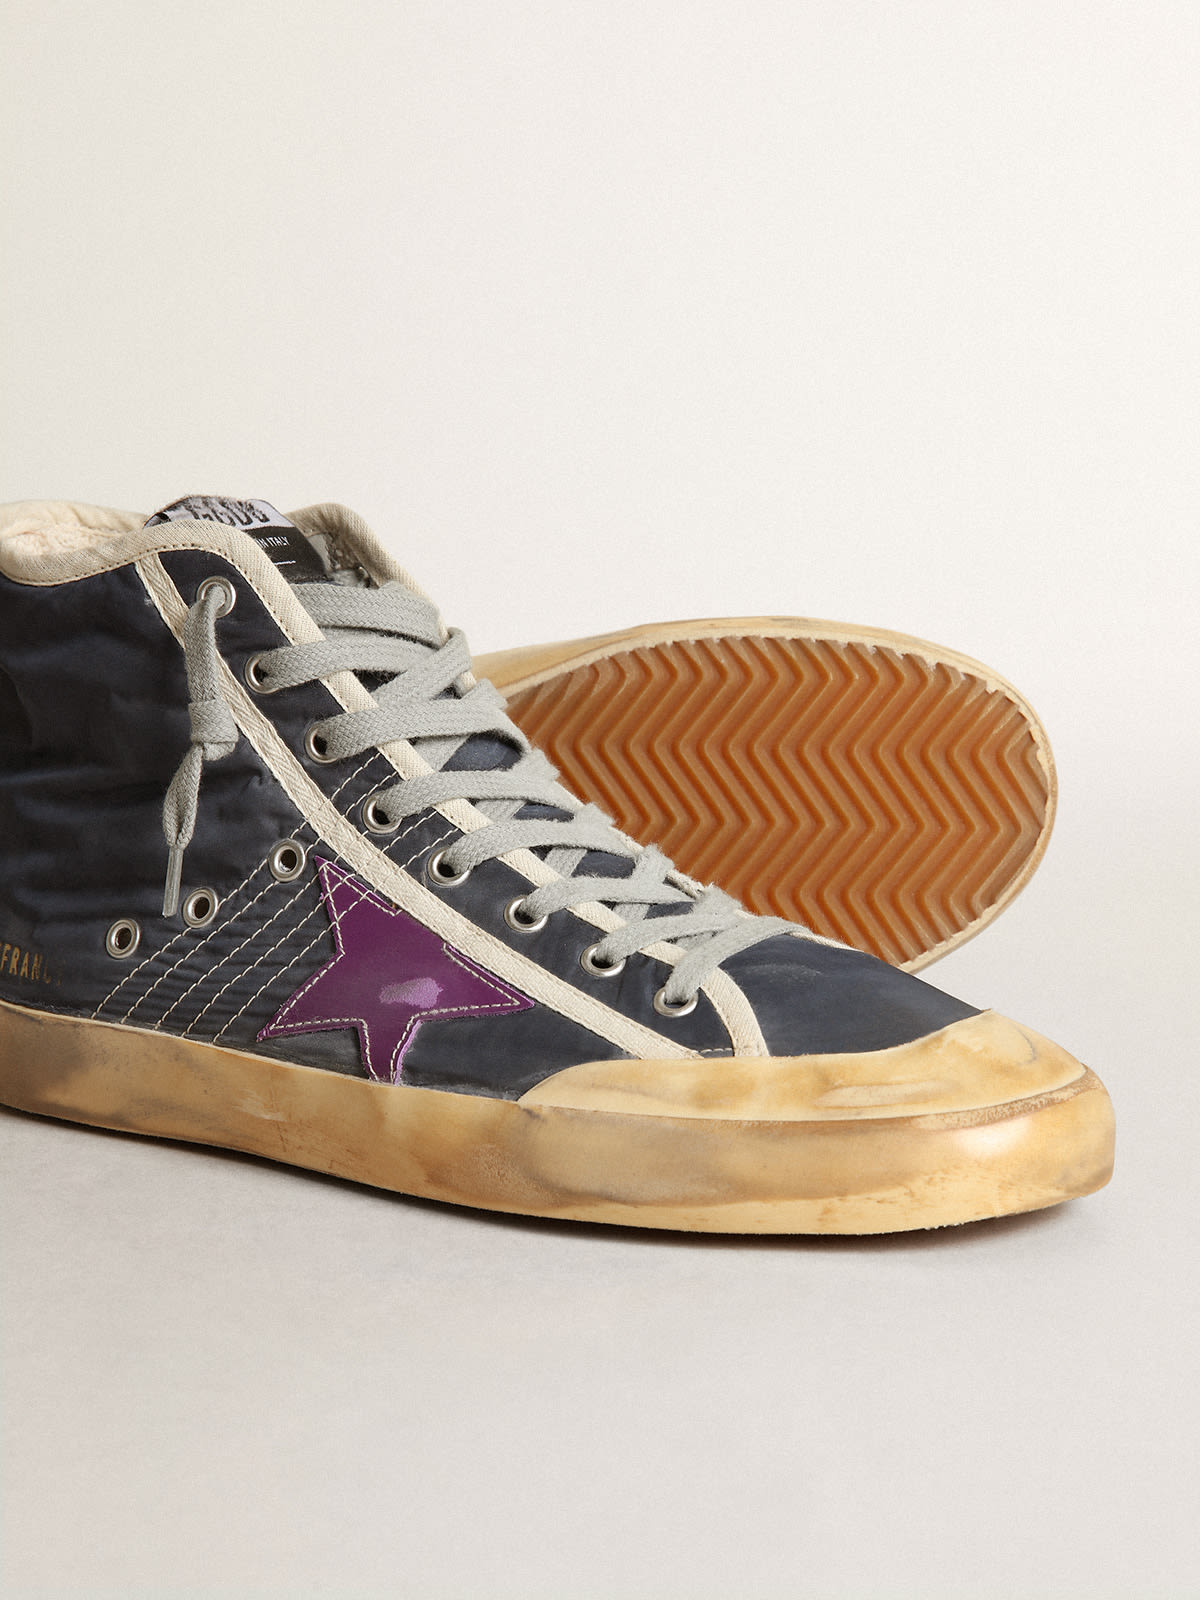 Golden Goose - Sneaker Francy Penstar in nylon blu navy con stella in pelle viola e talloncino in suede nero in 